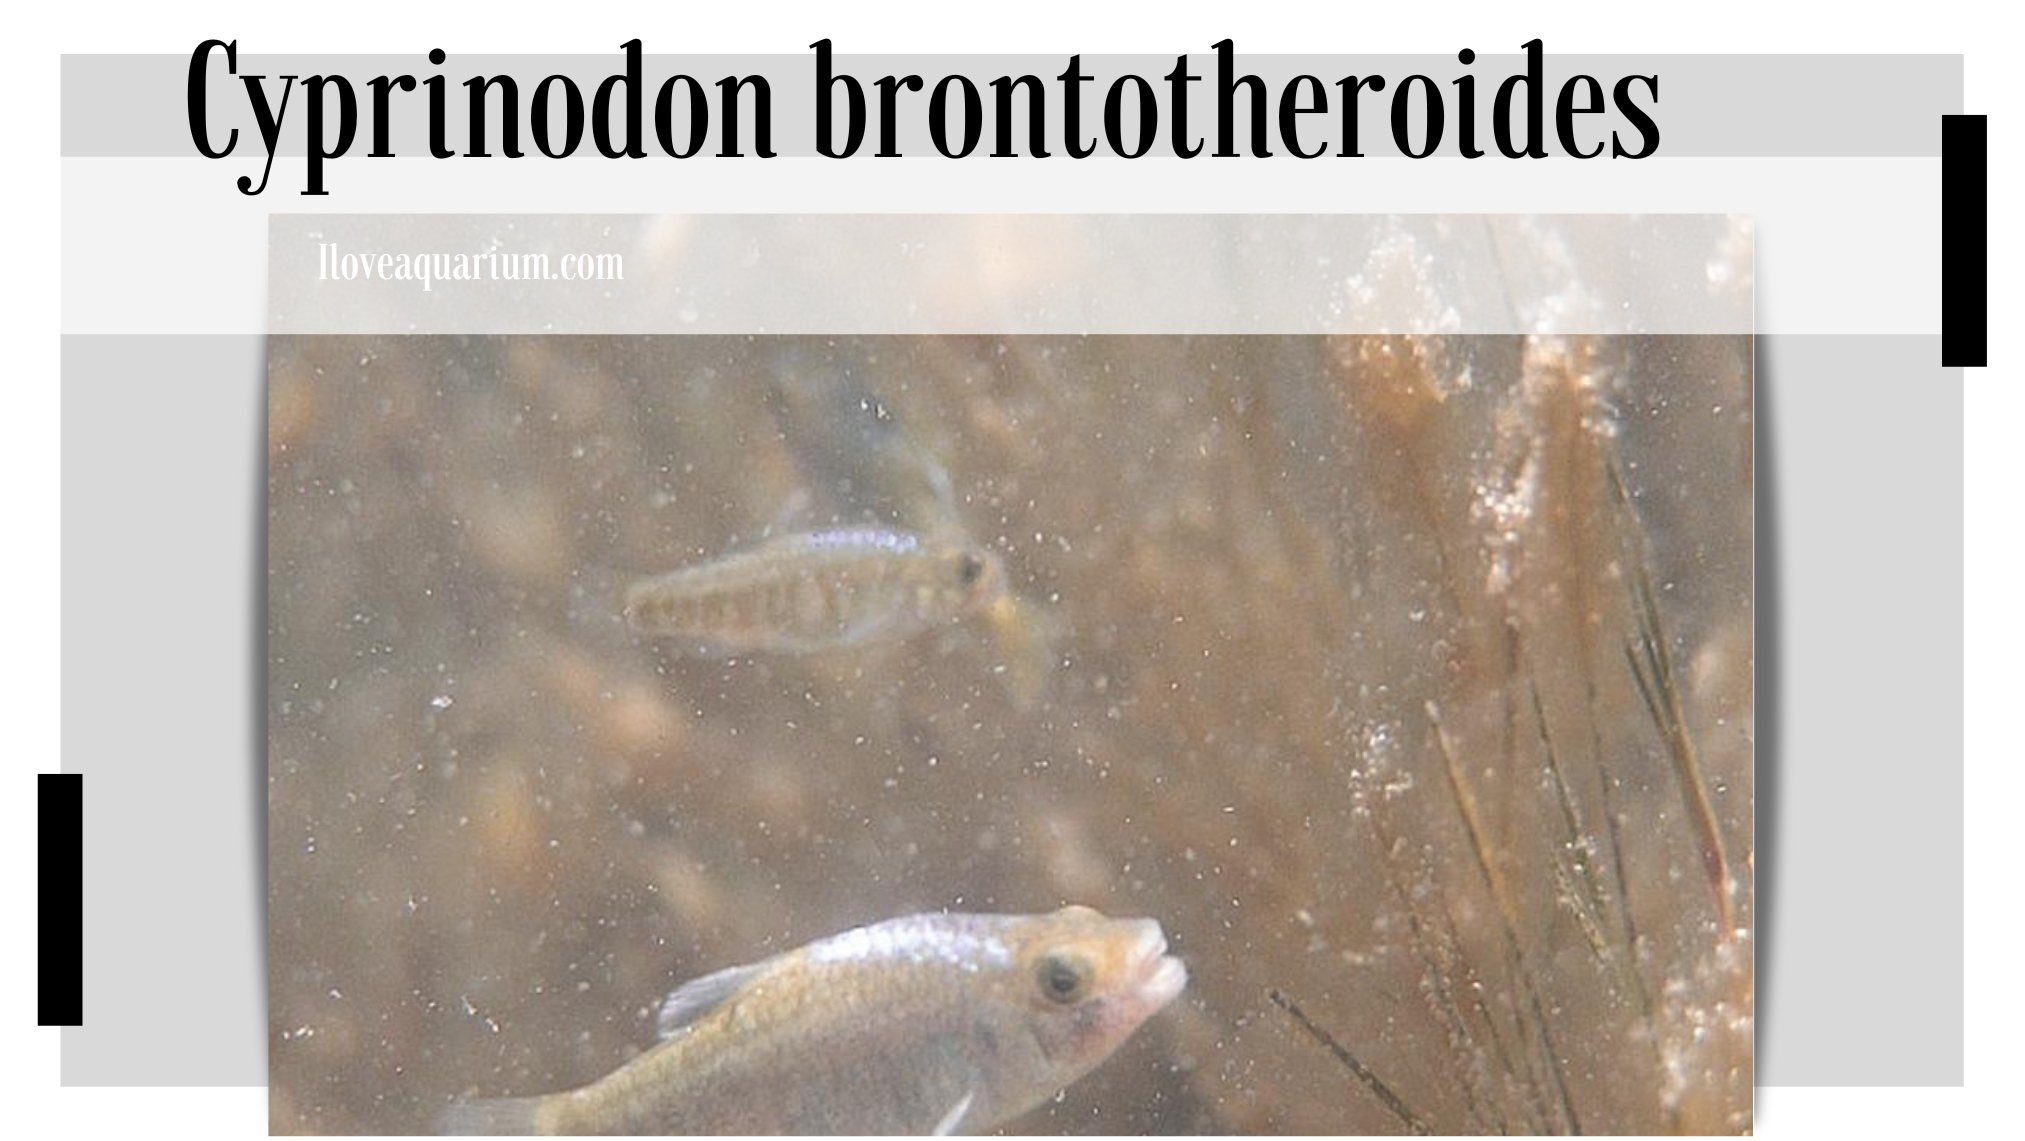 Cyprinodon brontotheroides (MARTIN & WAINWRIGHT, 2013) - Durophage Pupfish 